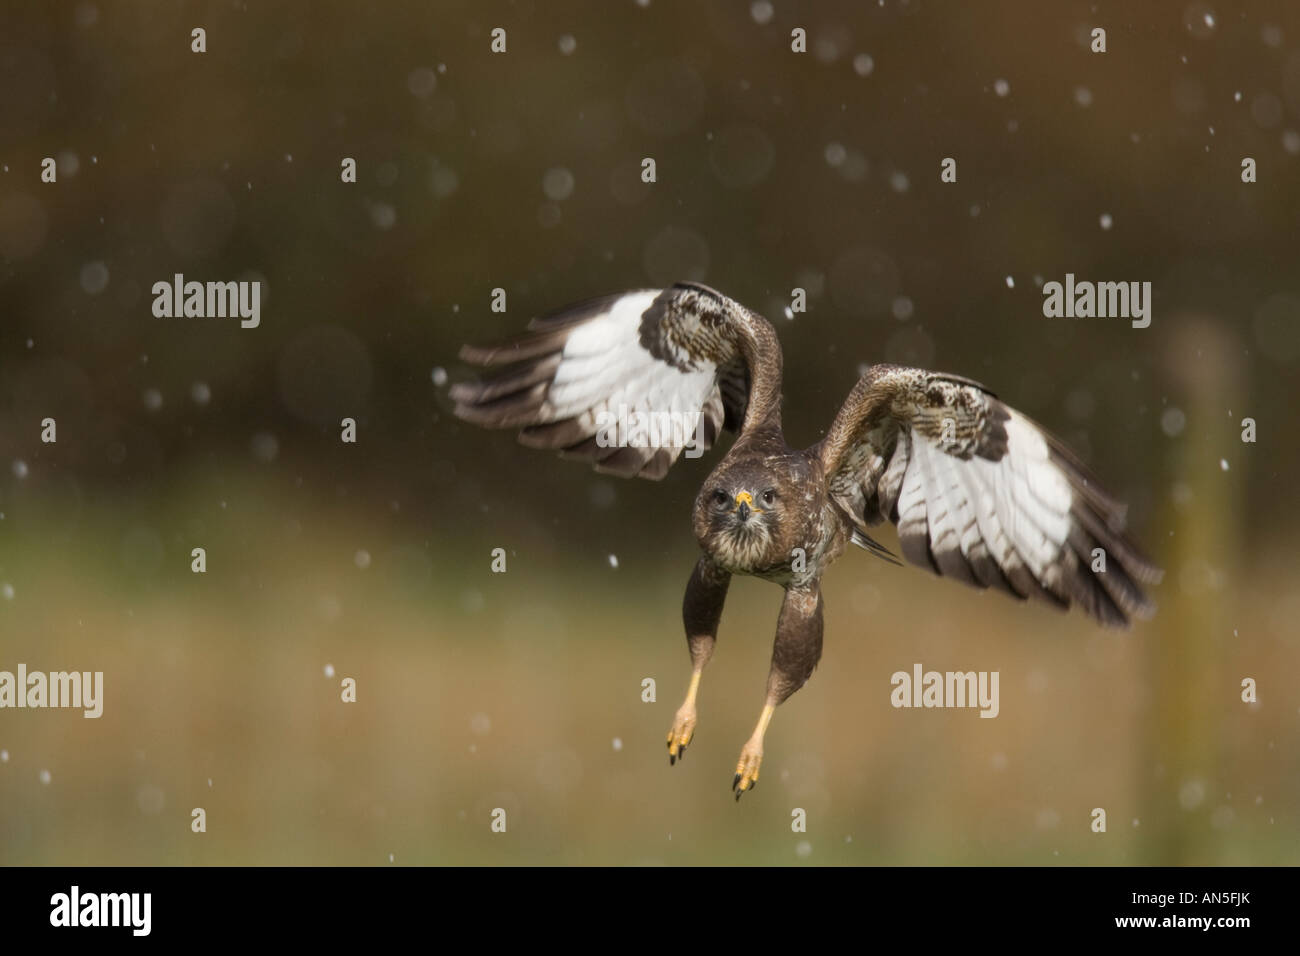 Eurasiática ratonero (Buteo buteo) volando a través de una lluvia de granizo Foto de stock